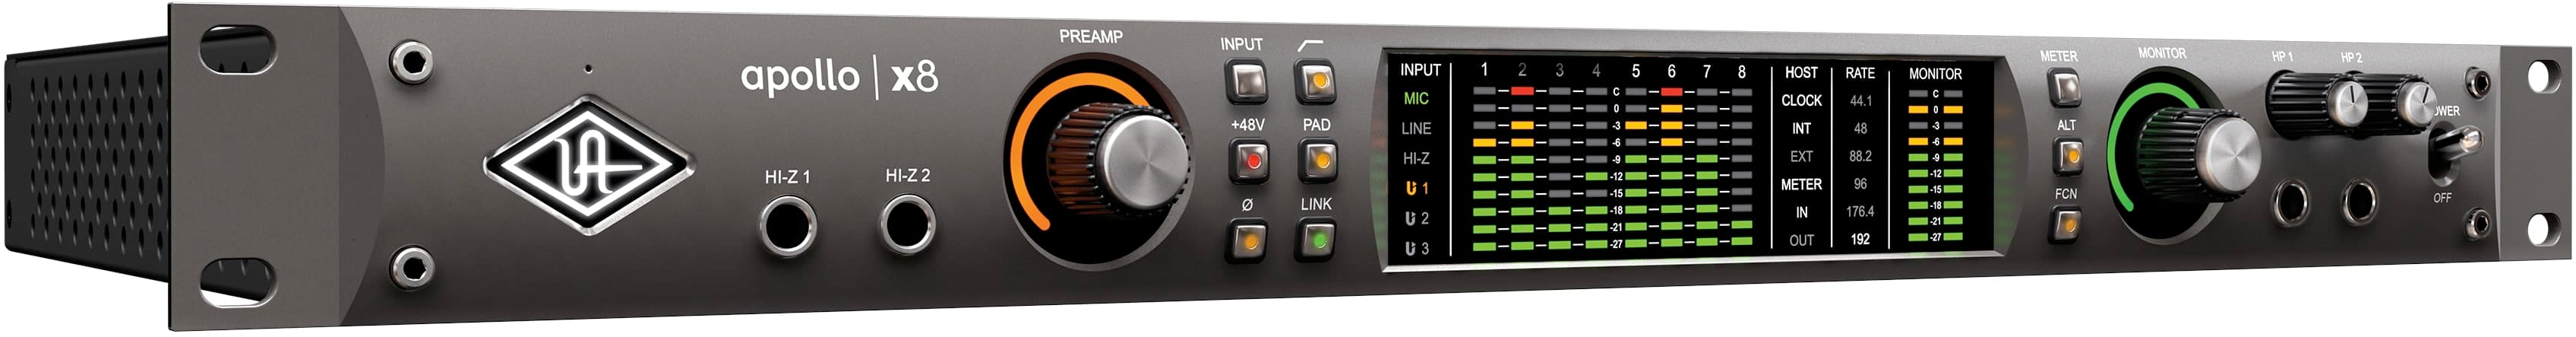 Universal Audio Apollo X8 - Interface de audio thunderbolt - Main picture